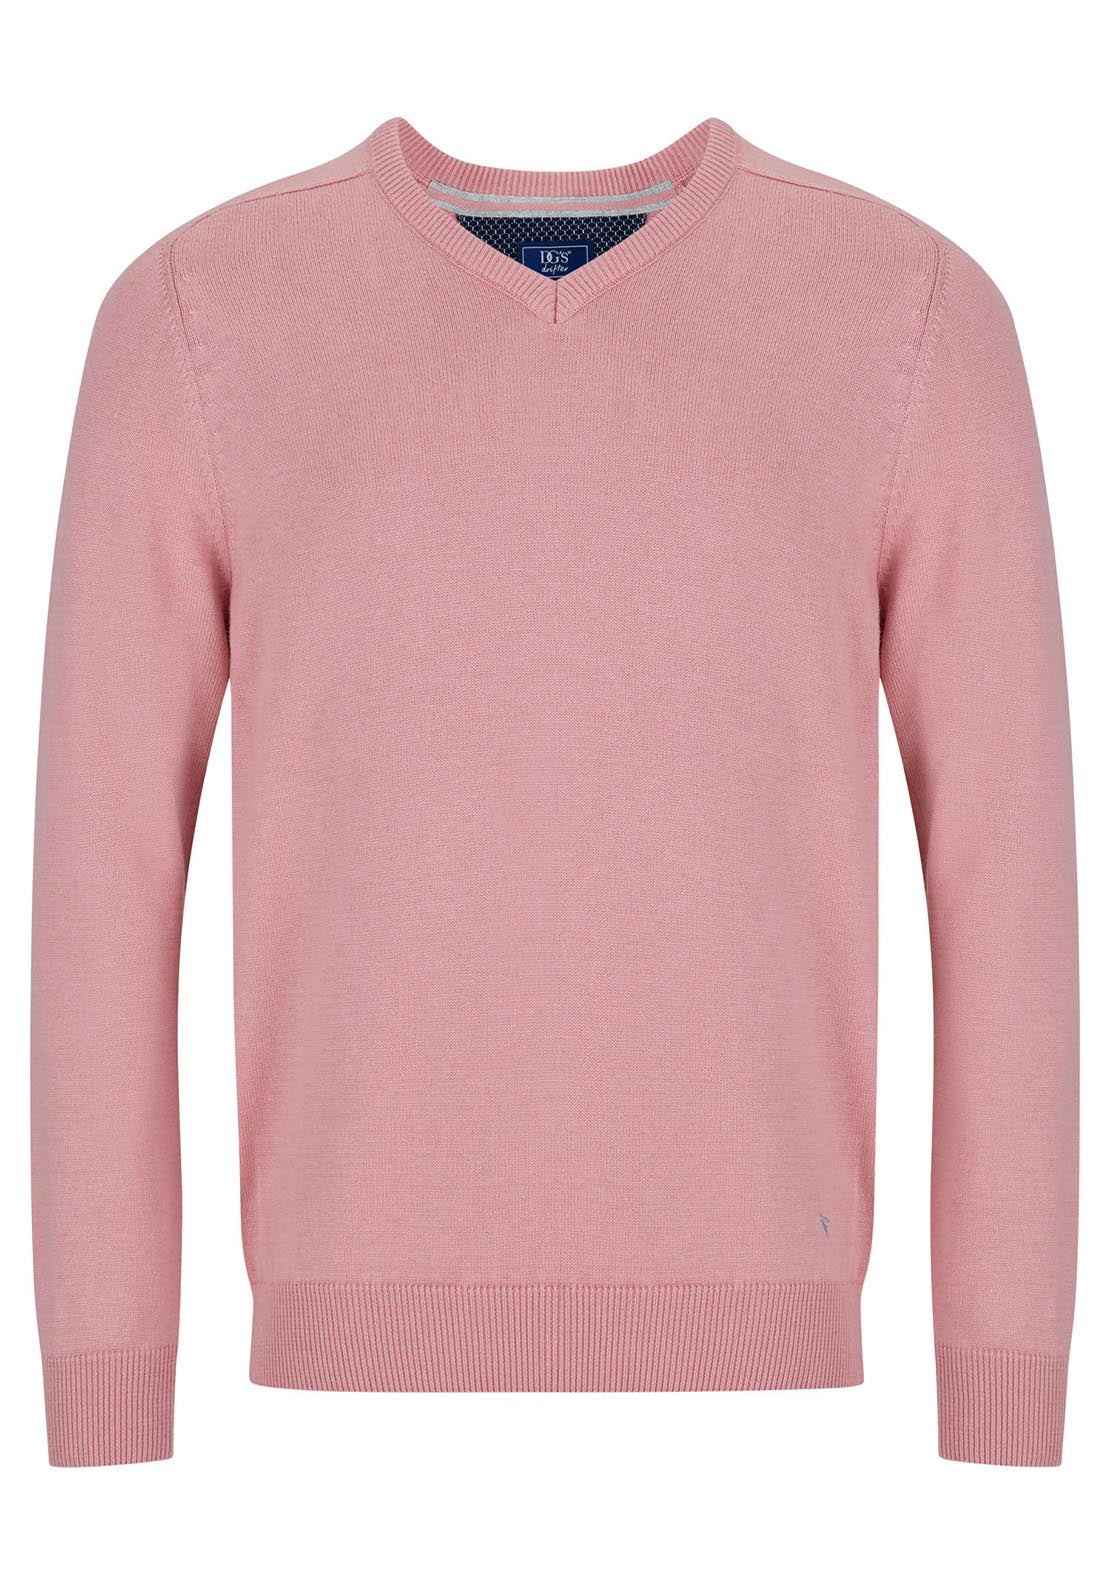 Drifter V Neck Cotton Knitwear - Pink 1 Shaws Department Stores